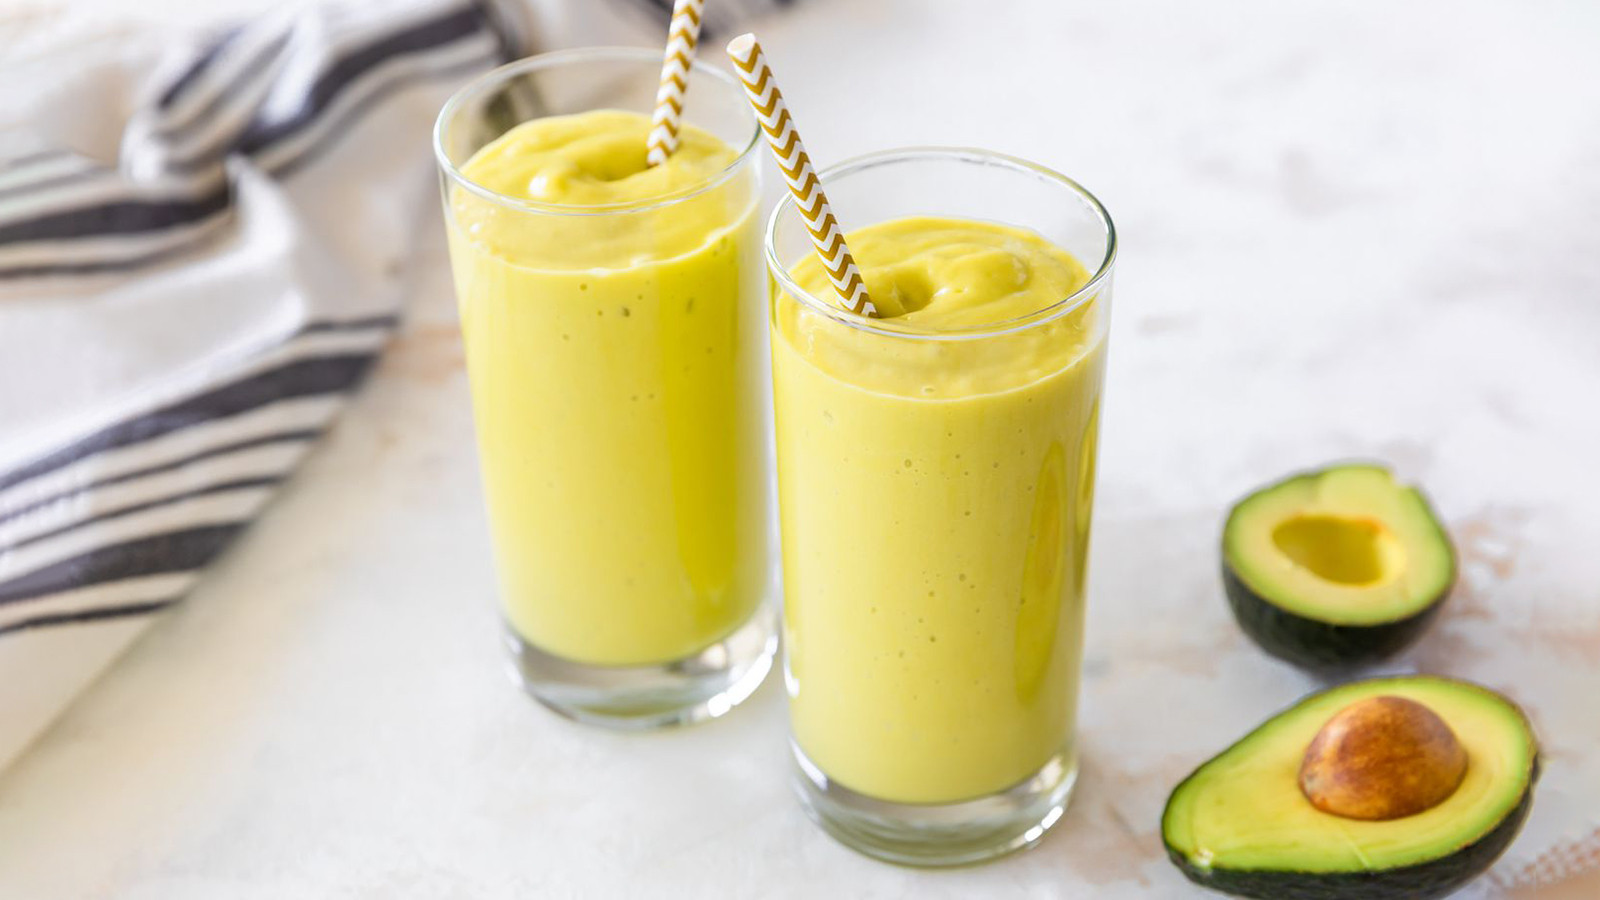 Benefits of avocado smoothies